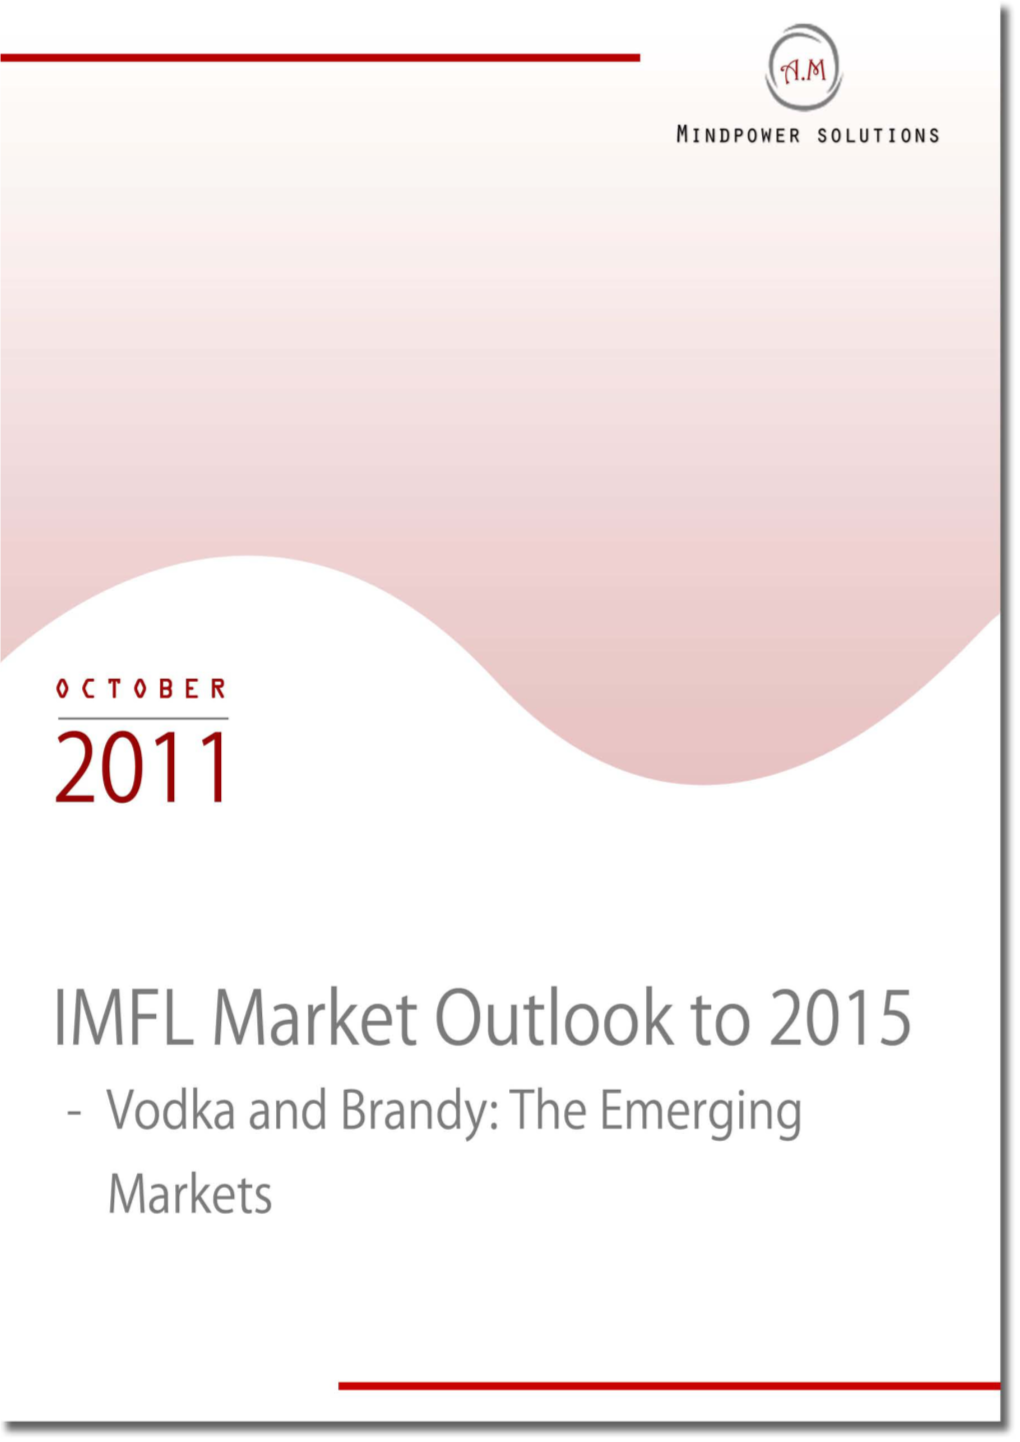 IMFL Market Outlook to 2015